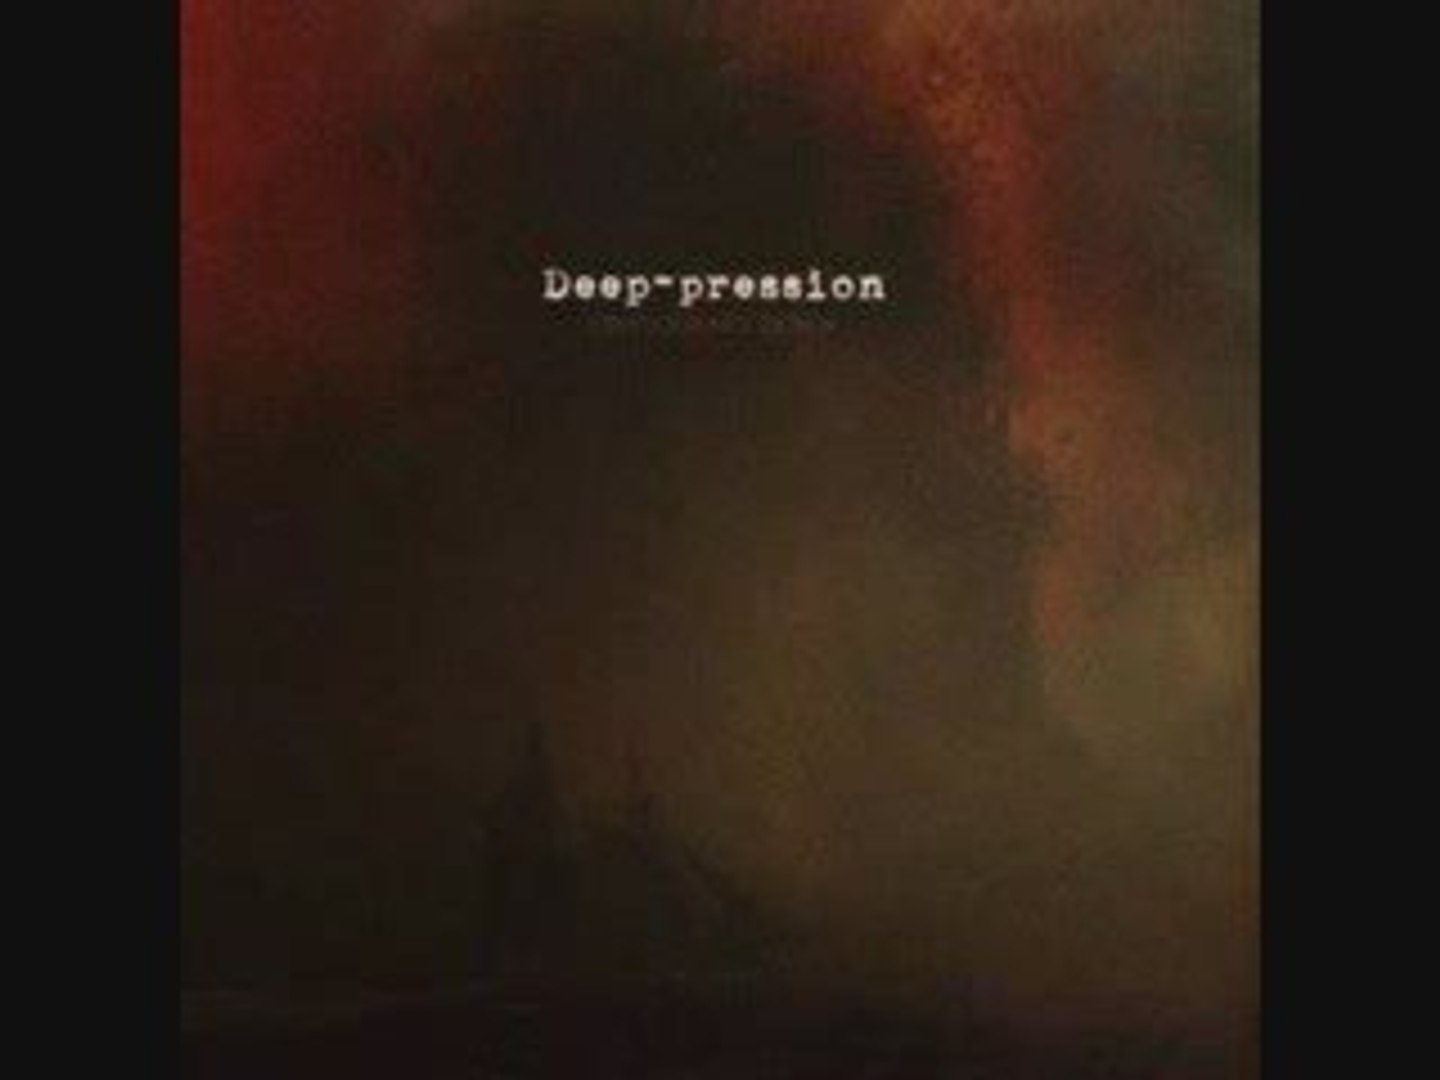 Deep-Pression - Deep Journey Down